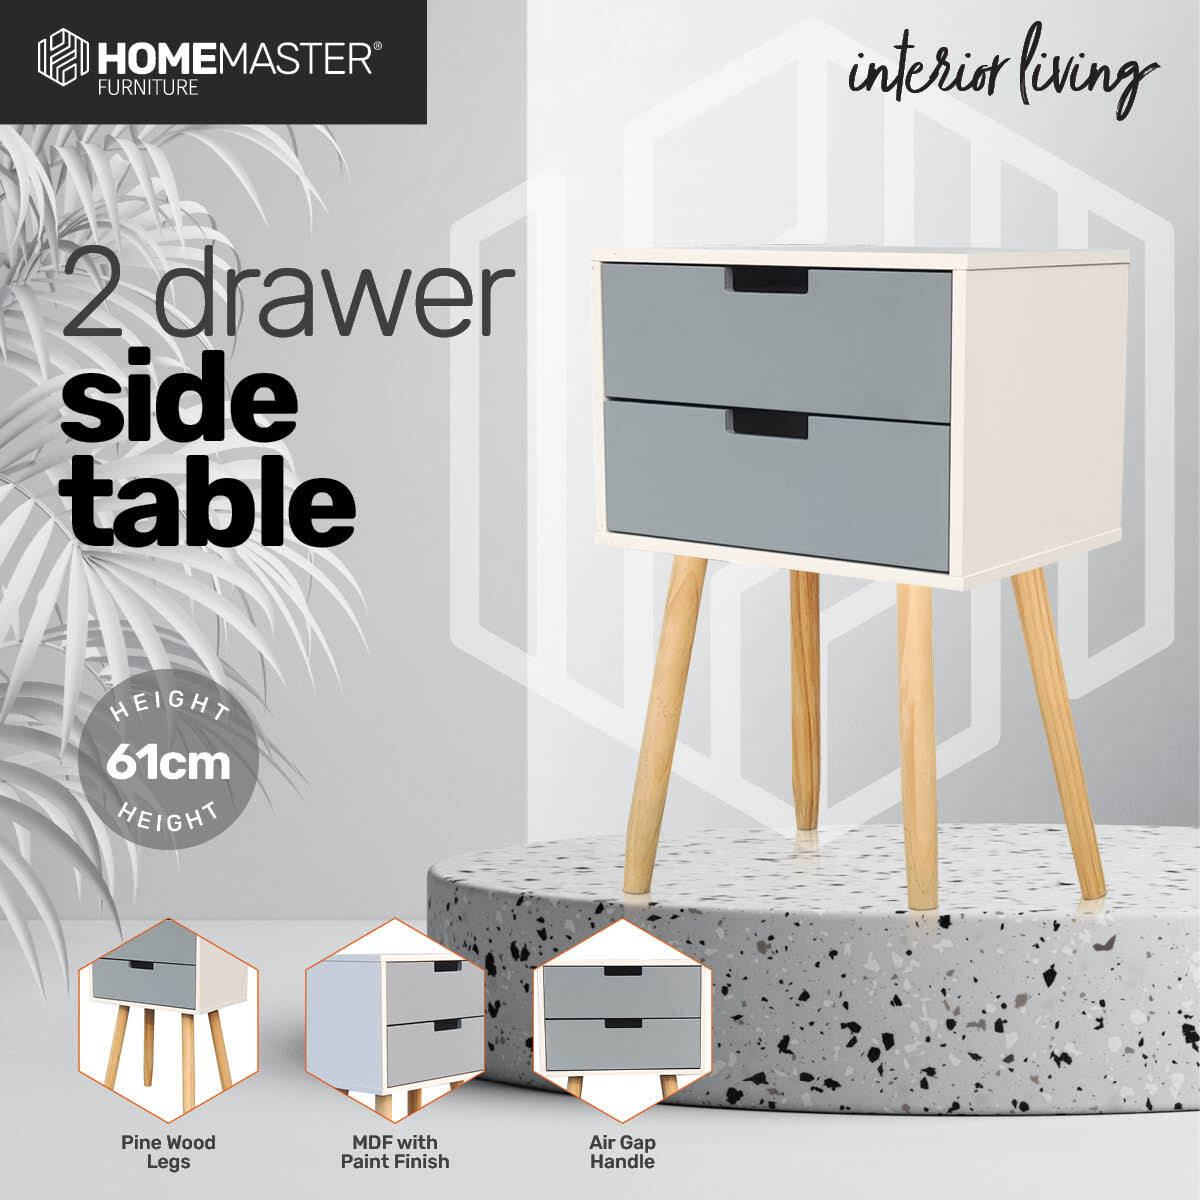 Sleek Modern 2-Drawer Side Table: Stylish Neutral Design (61cm)